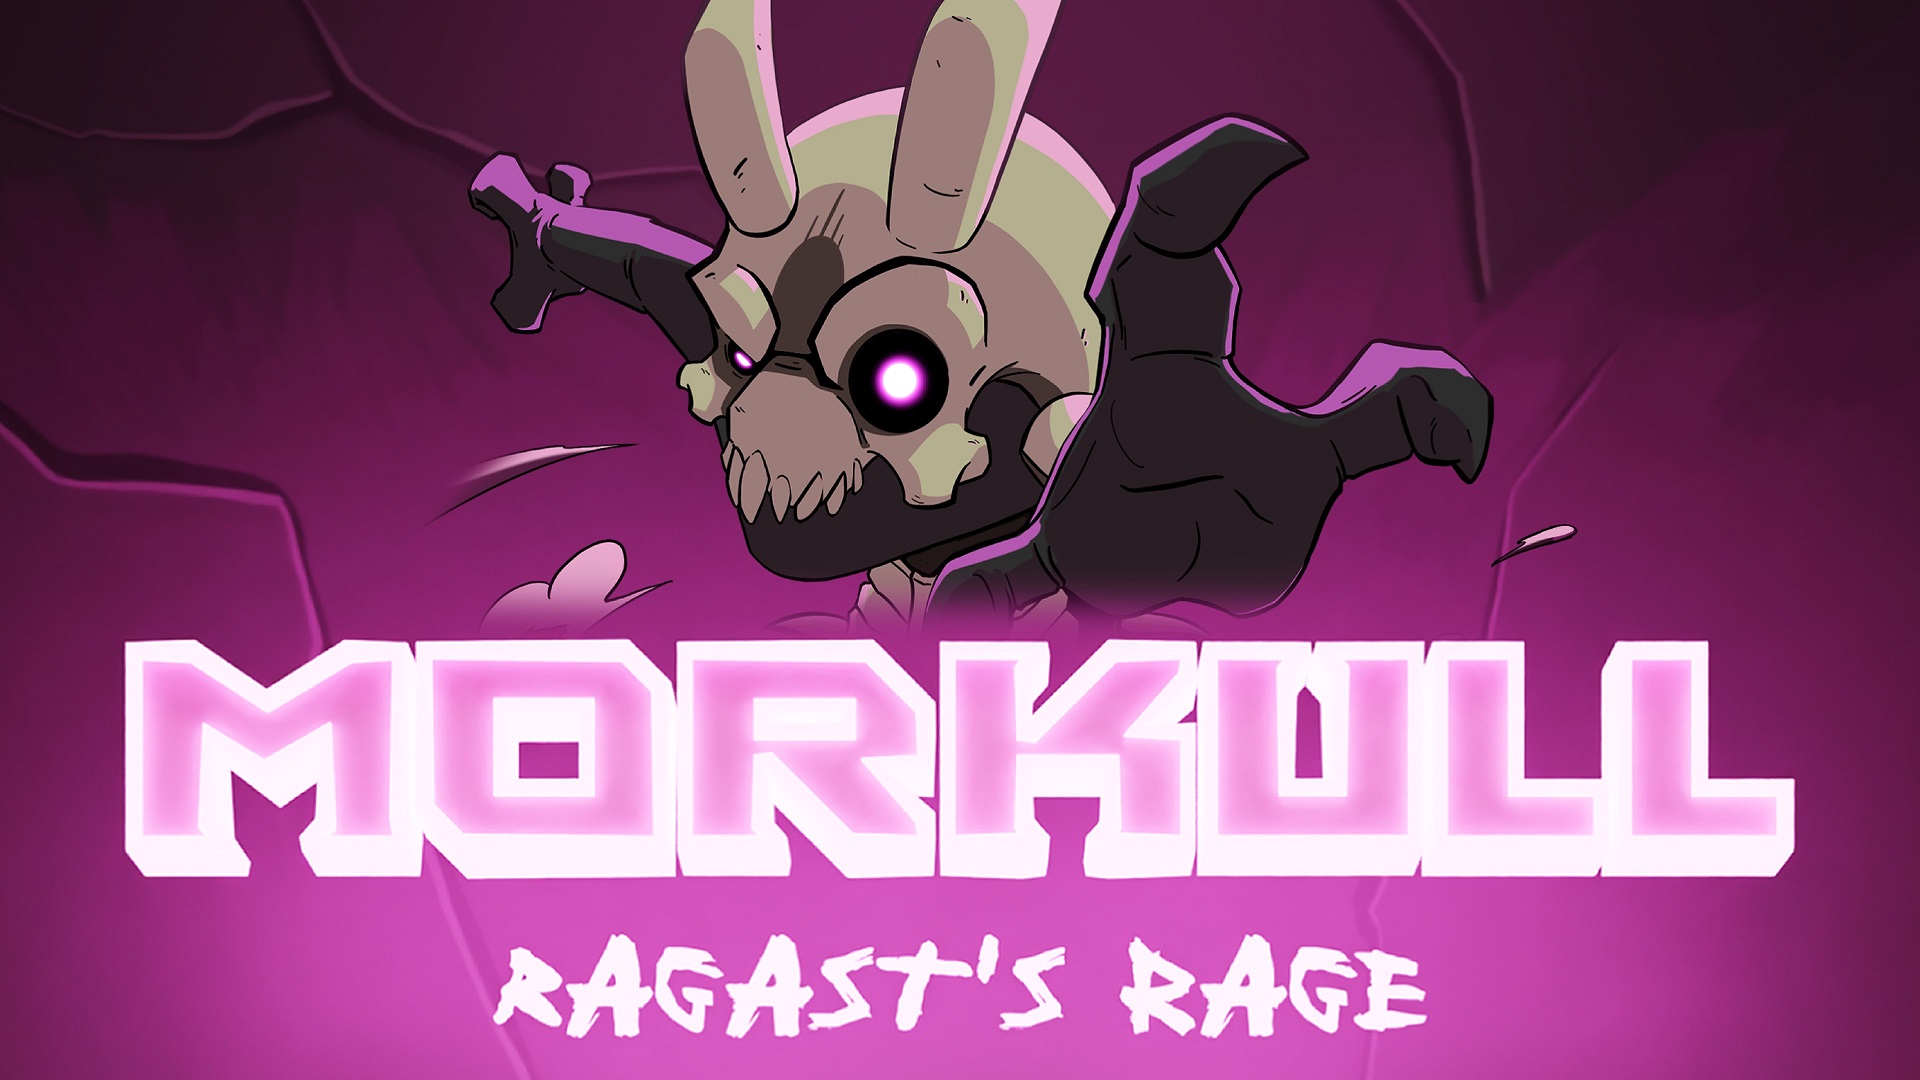 Morkull Ragast's Rage